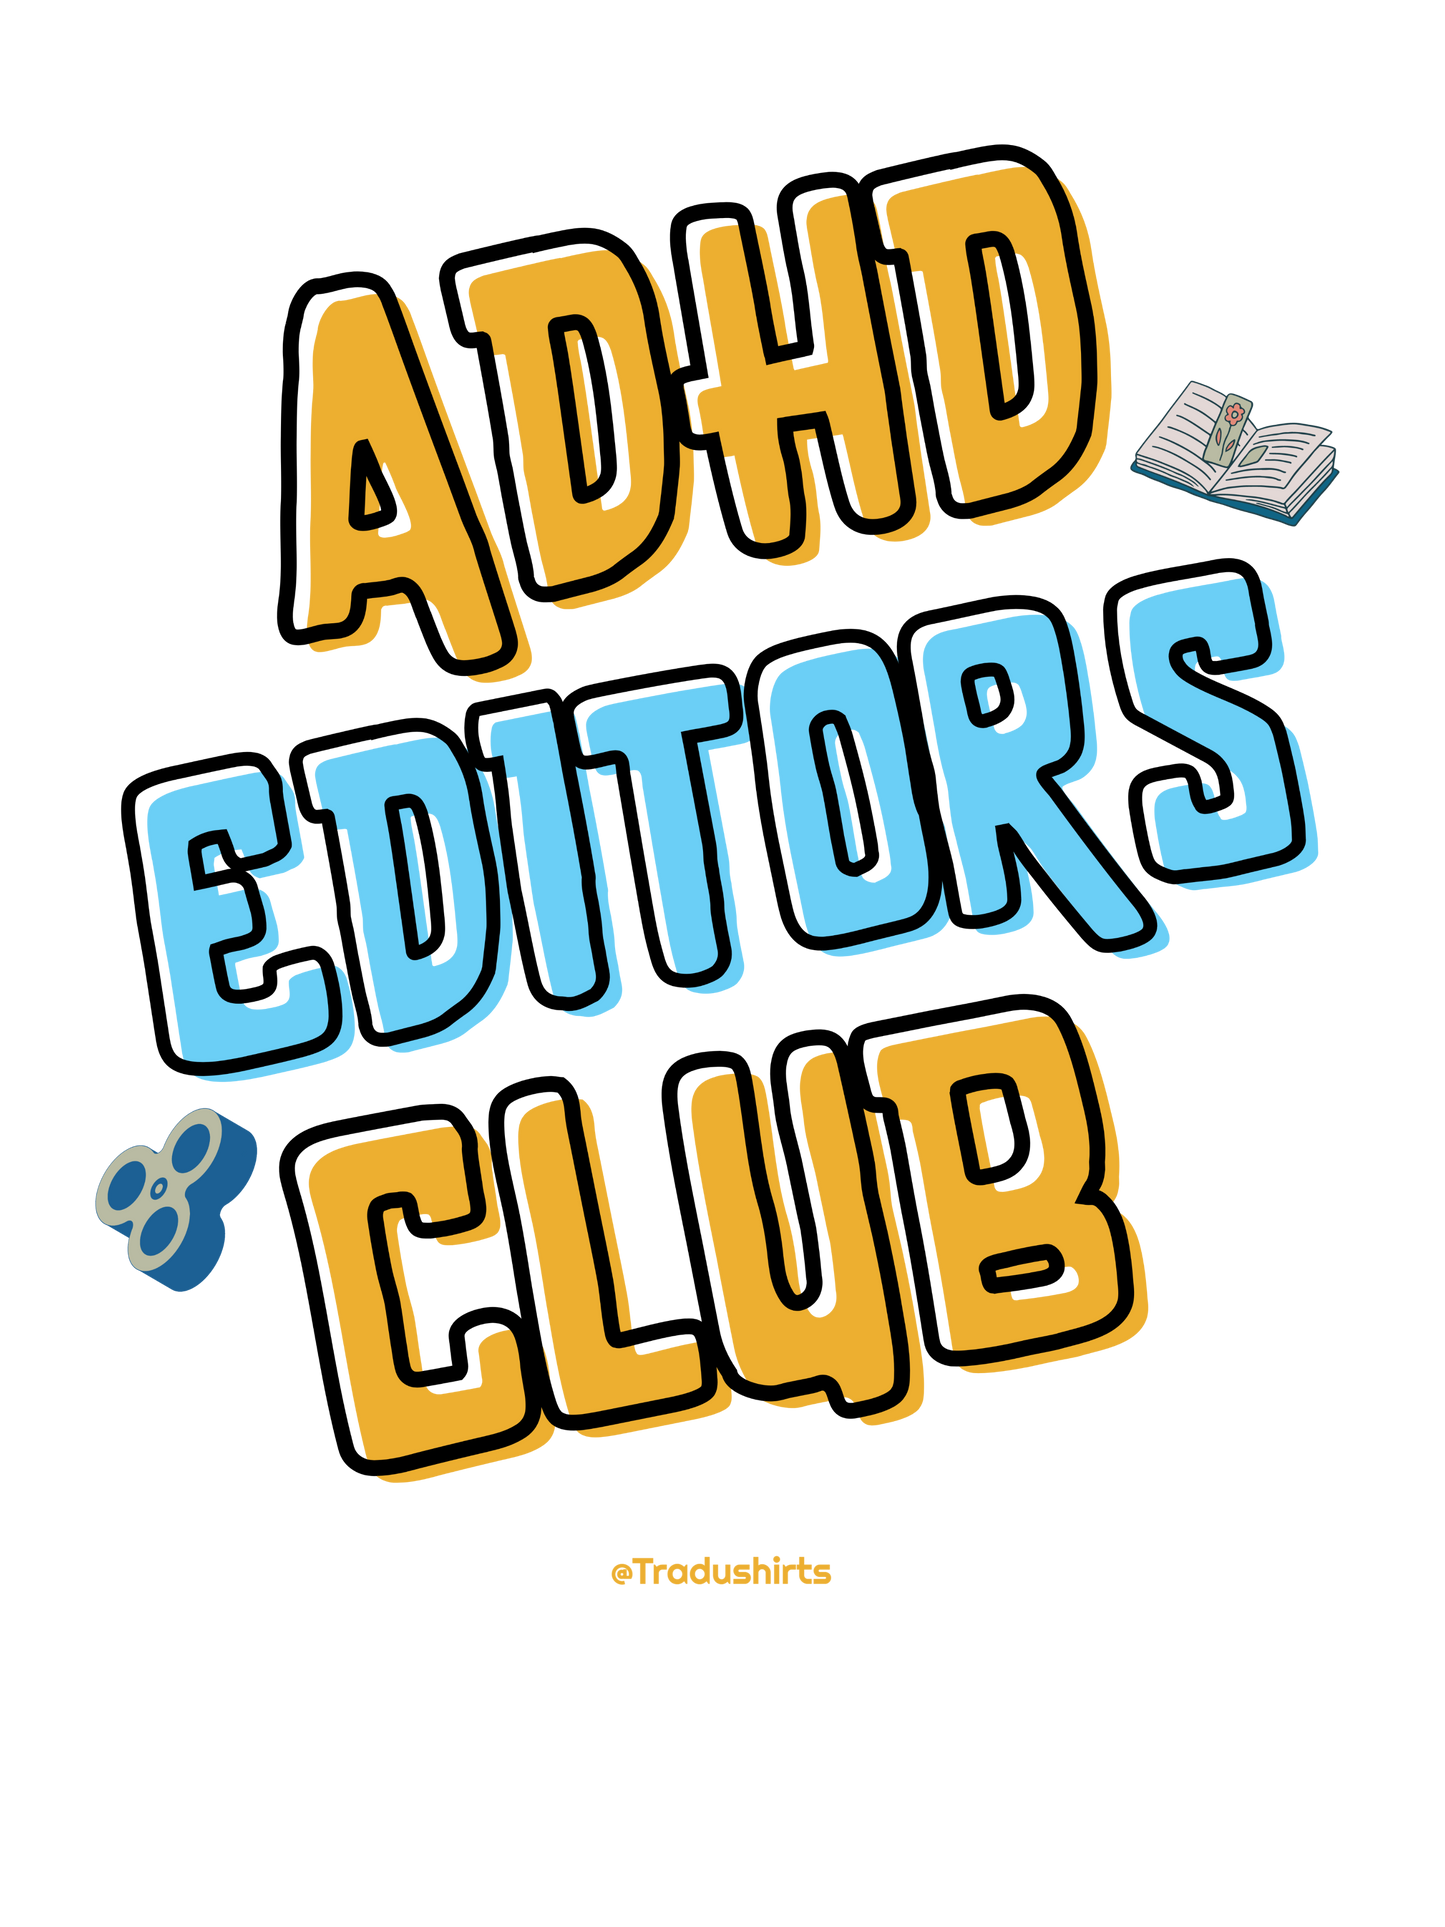 Editors club - ecobag